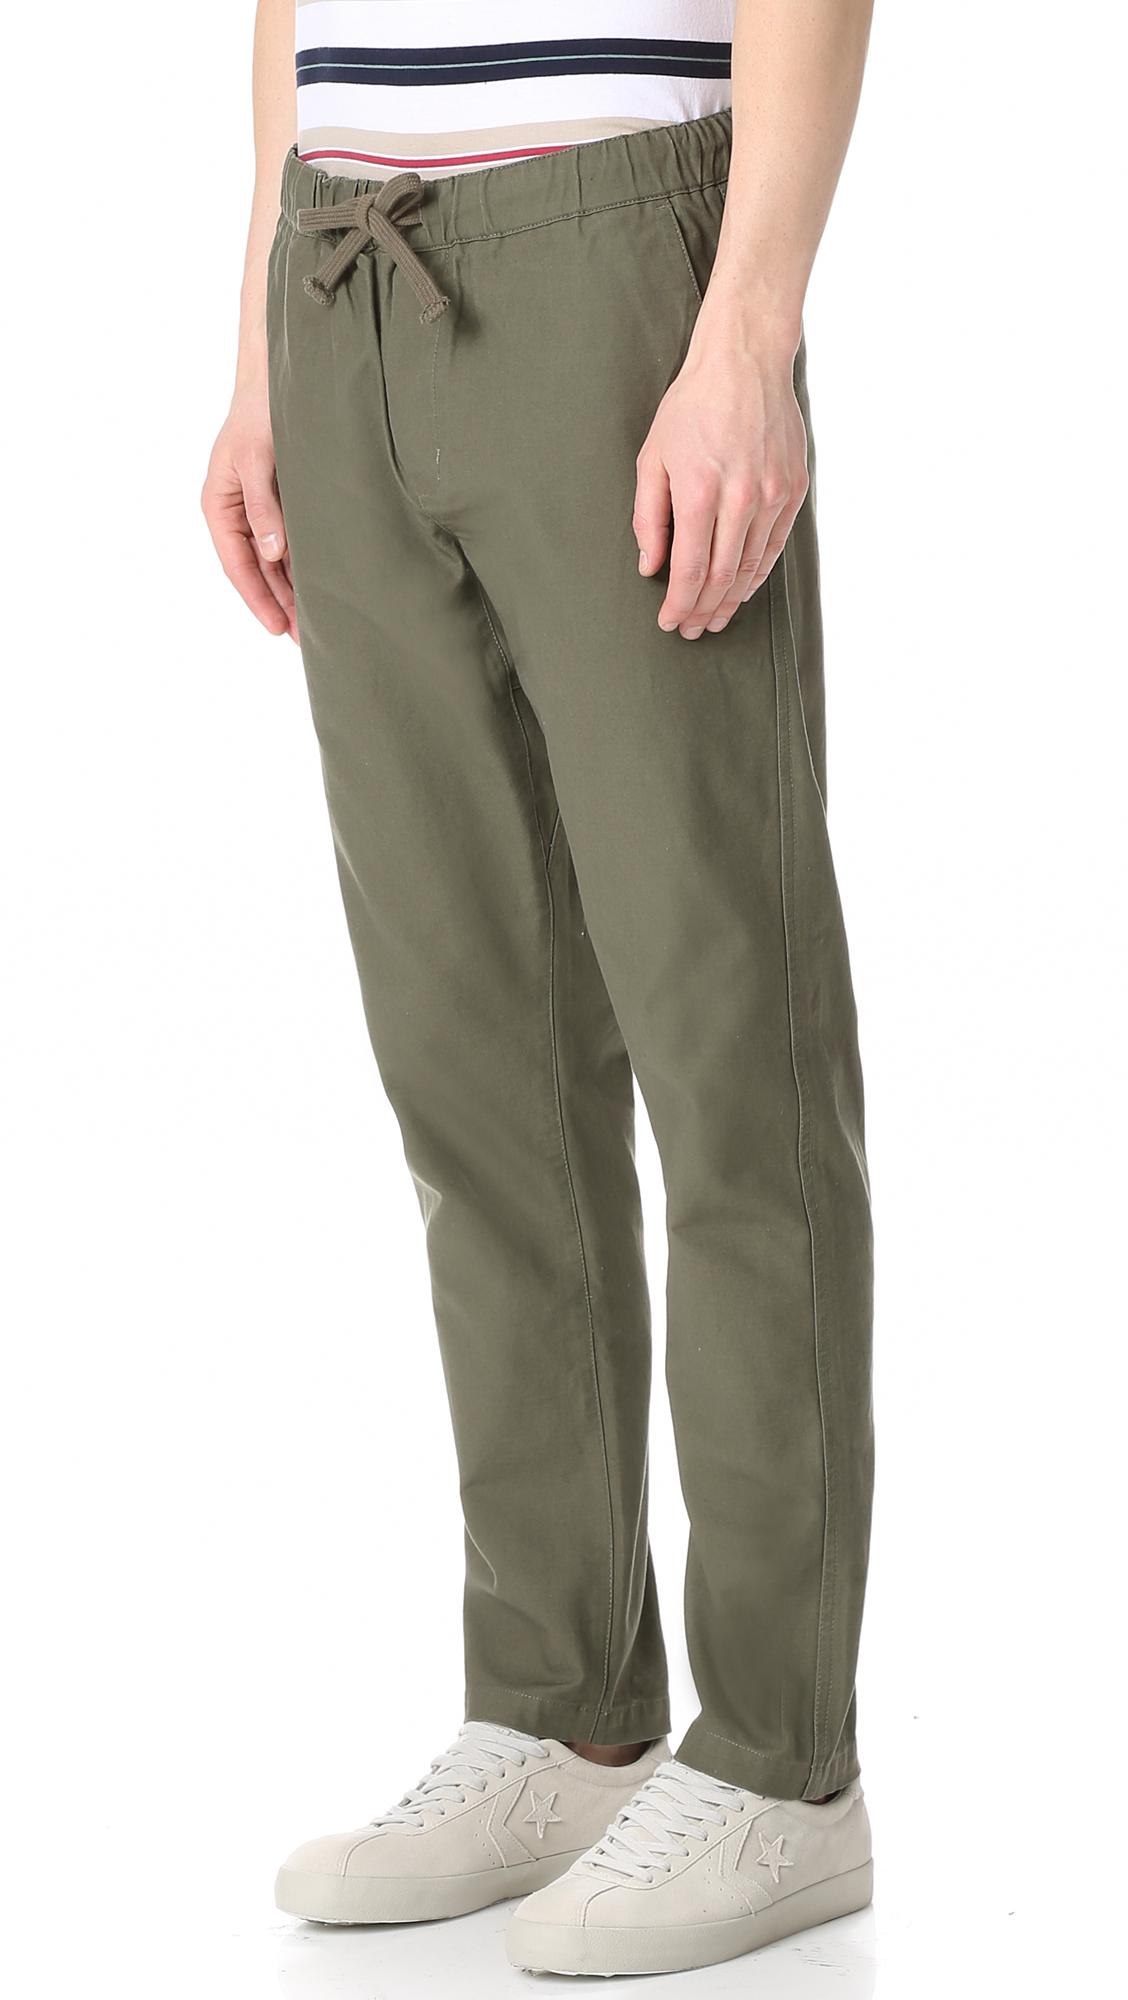 Obey Cotton Traveler Slub Twill Pants in Army (Green) for Men - Lyst